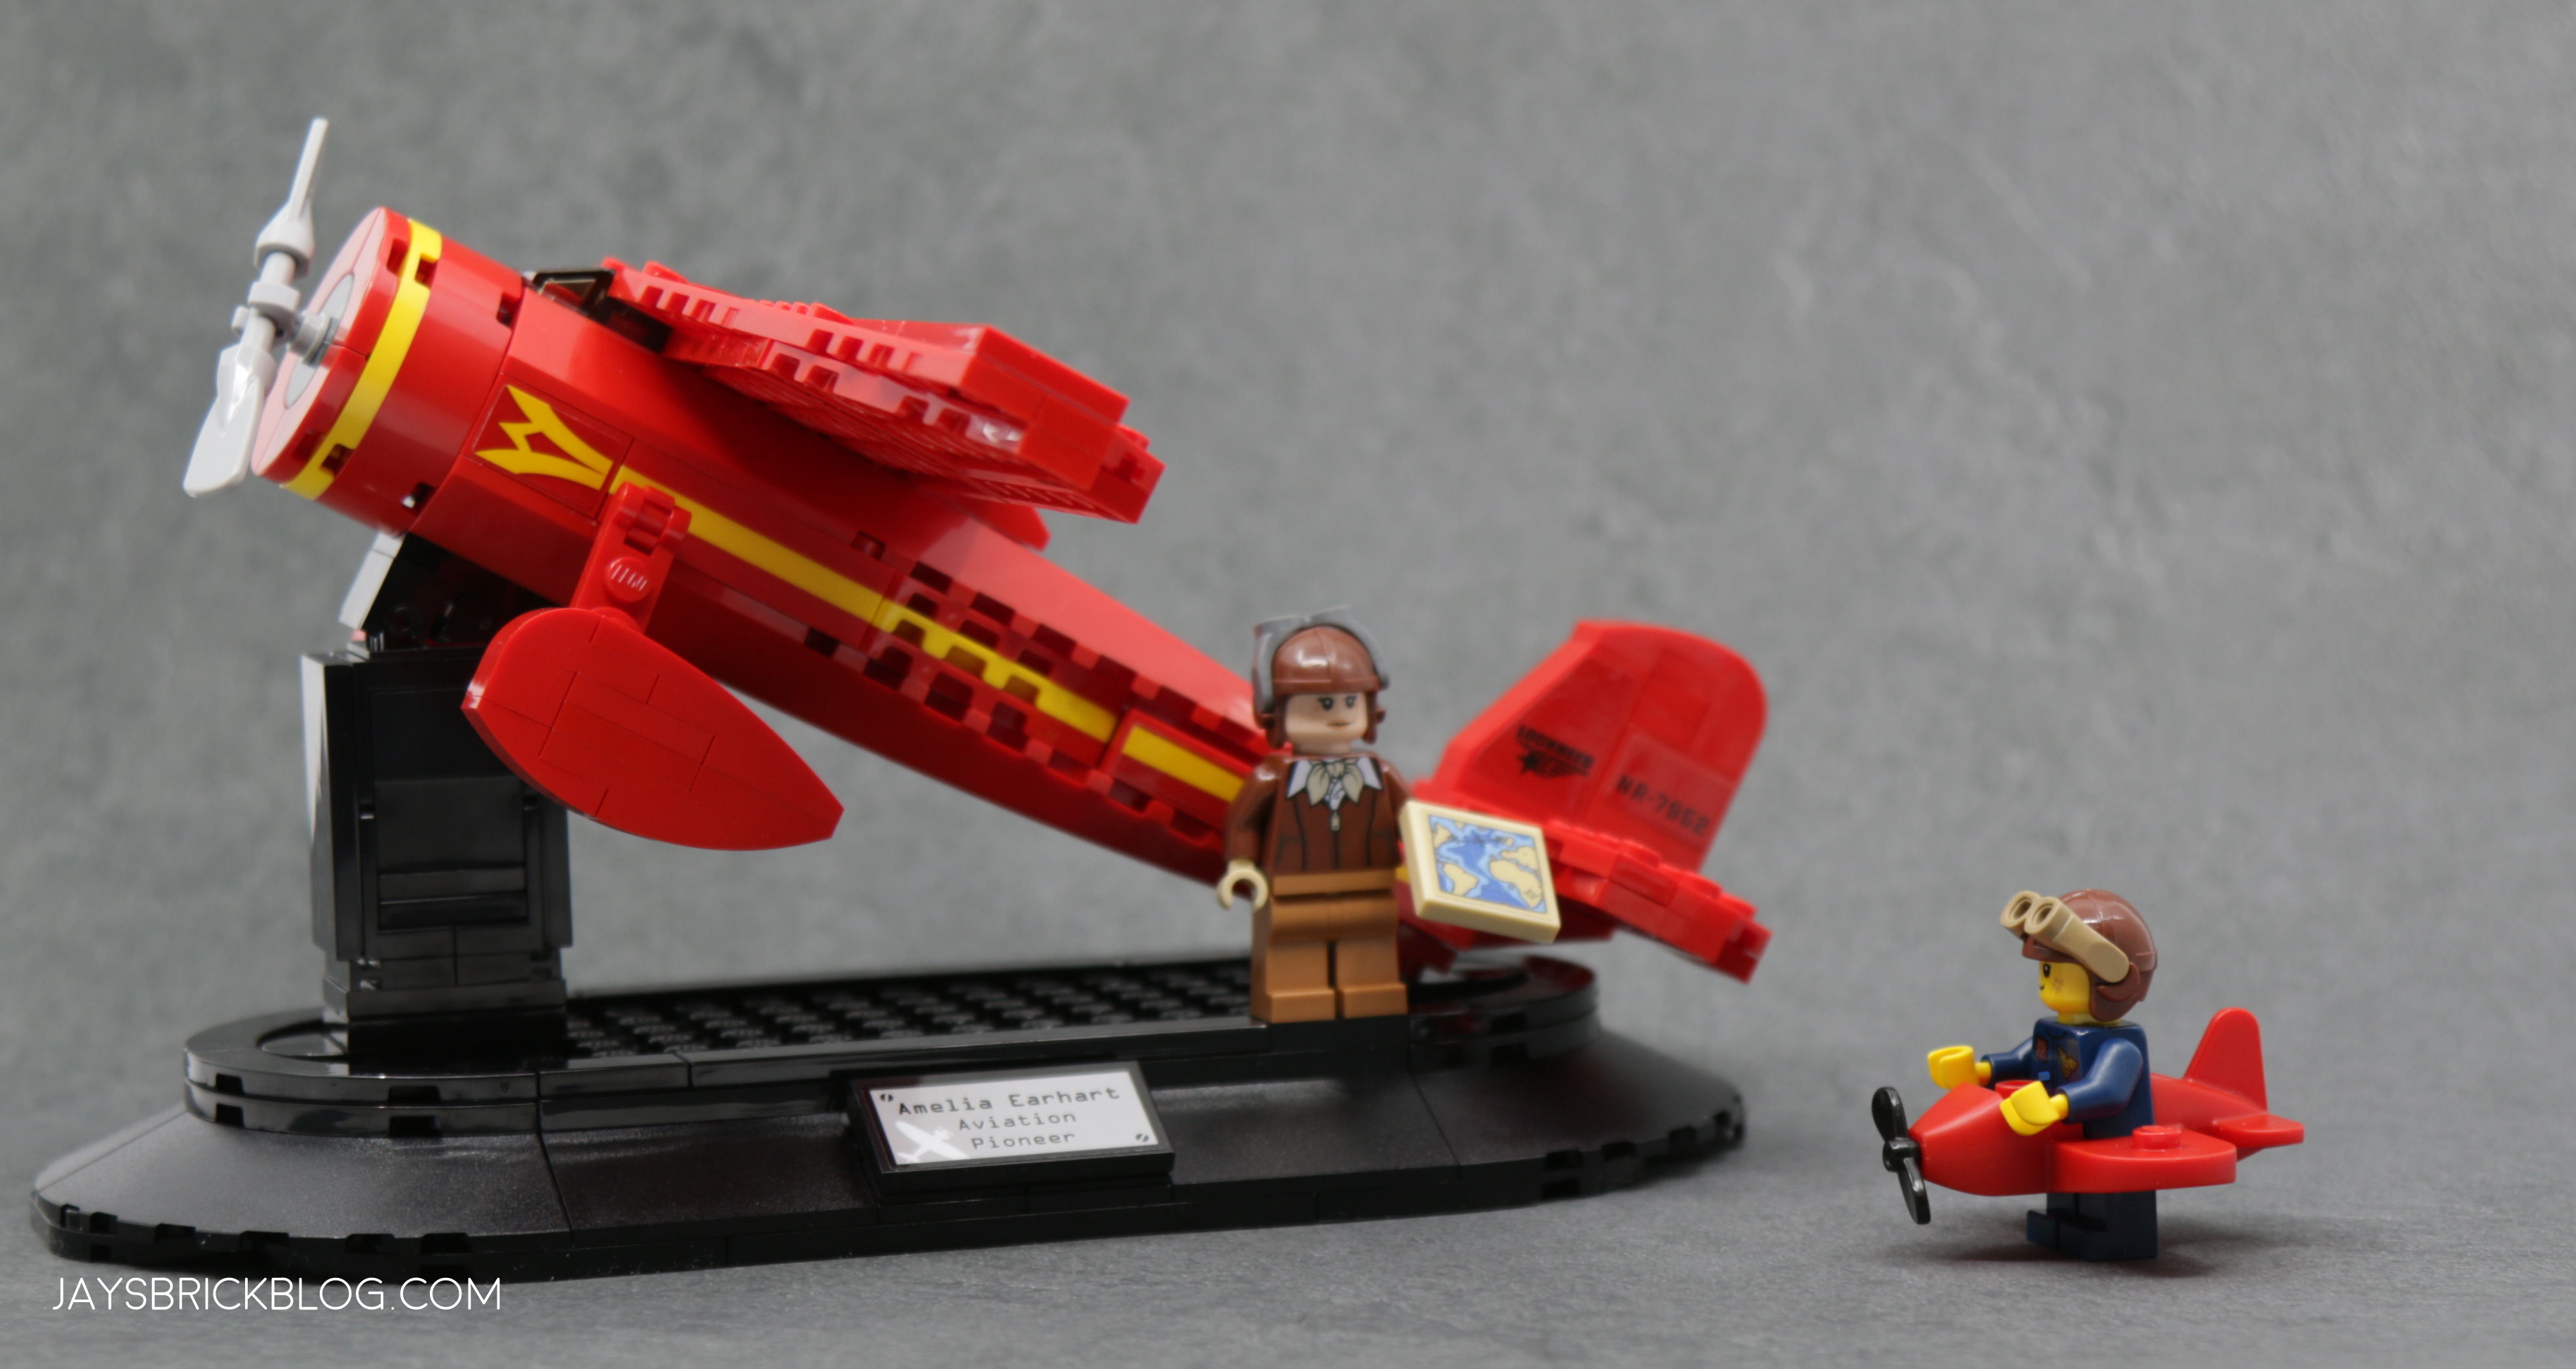 40450 for sale online LEGO Amelia Earhart Tribute